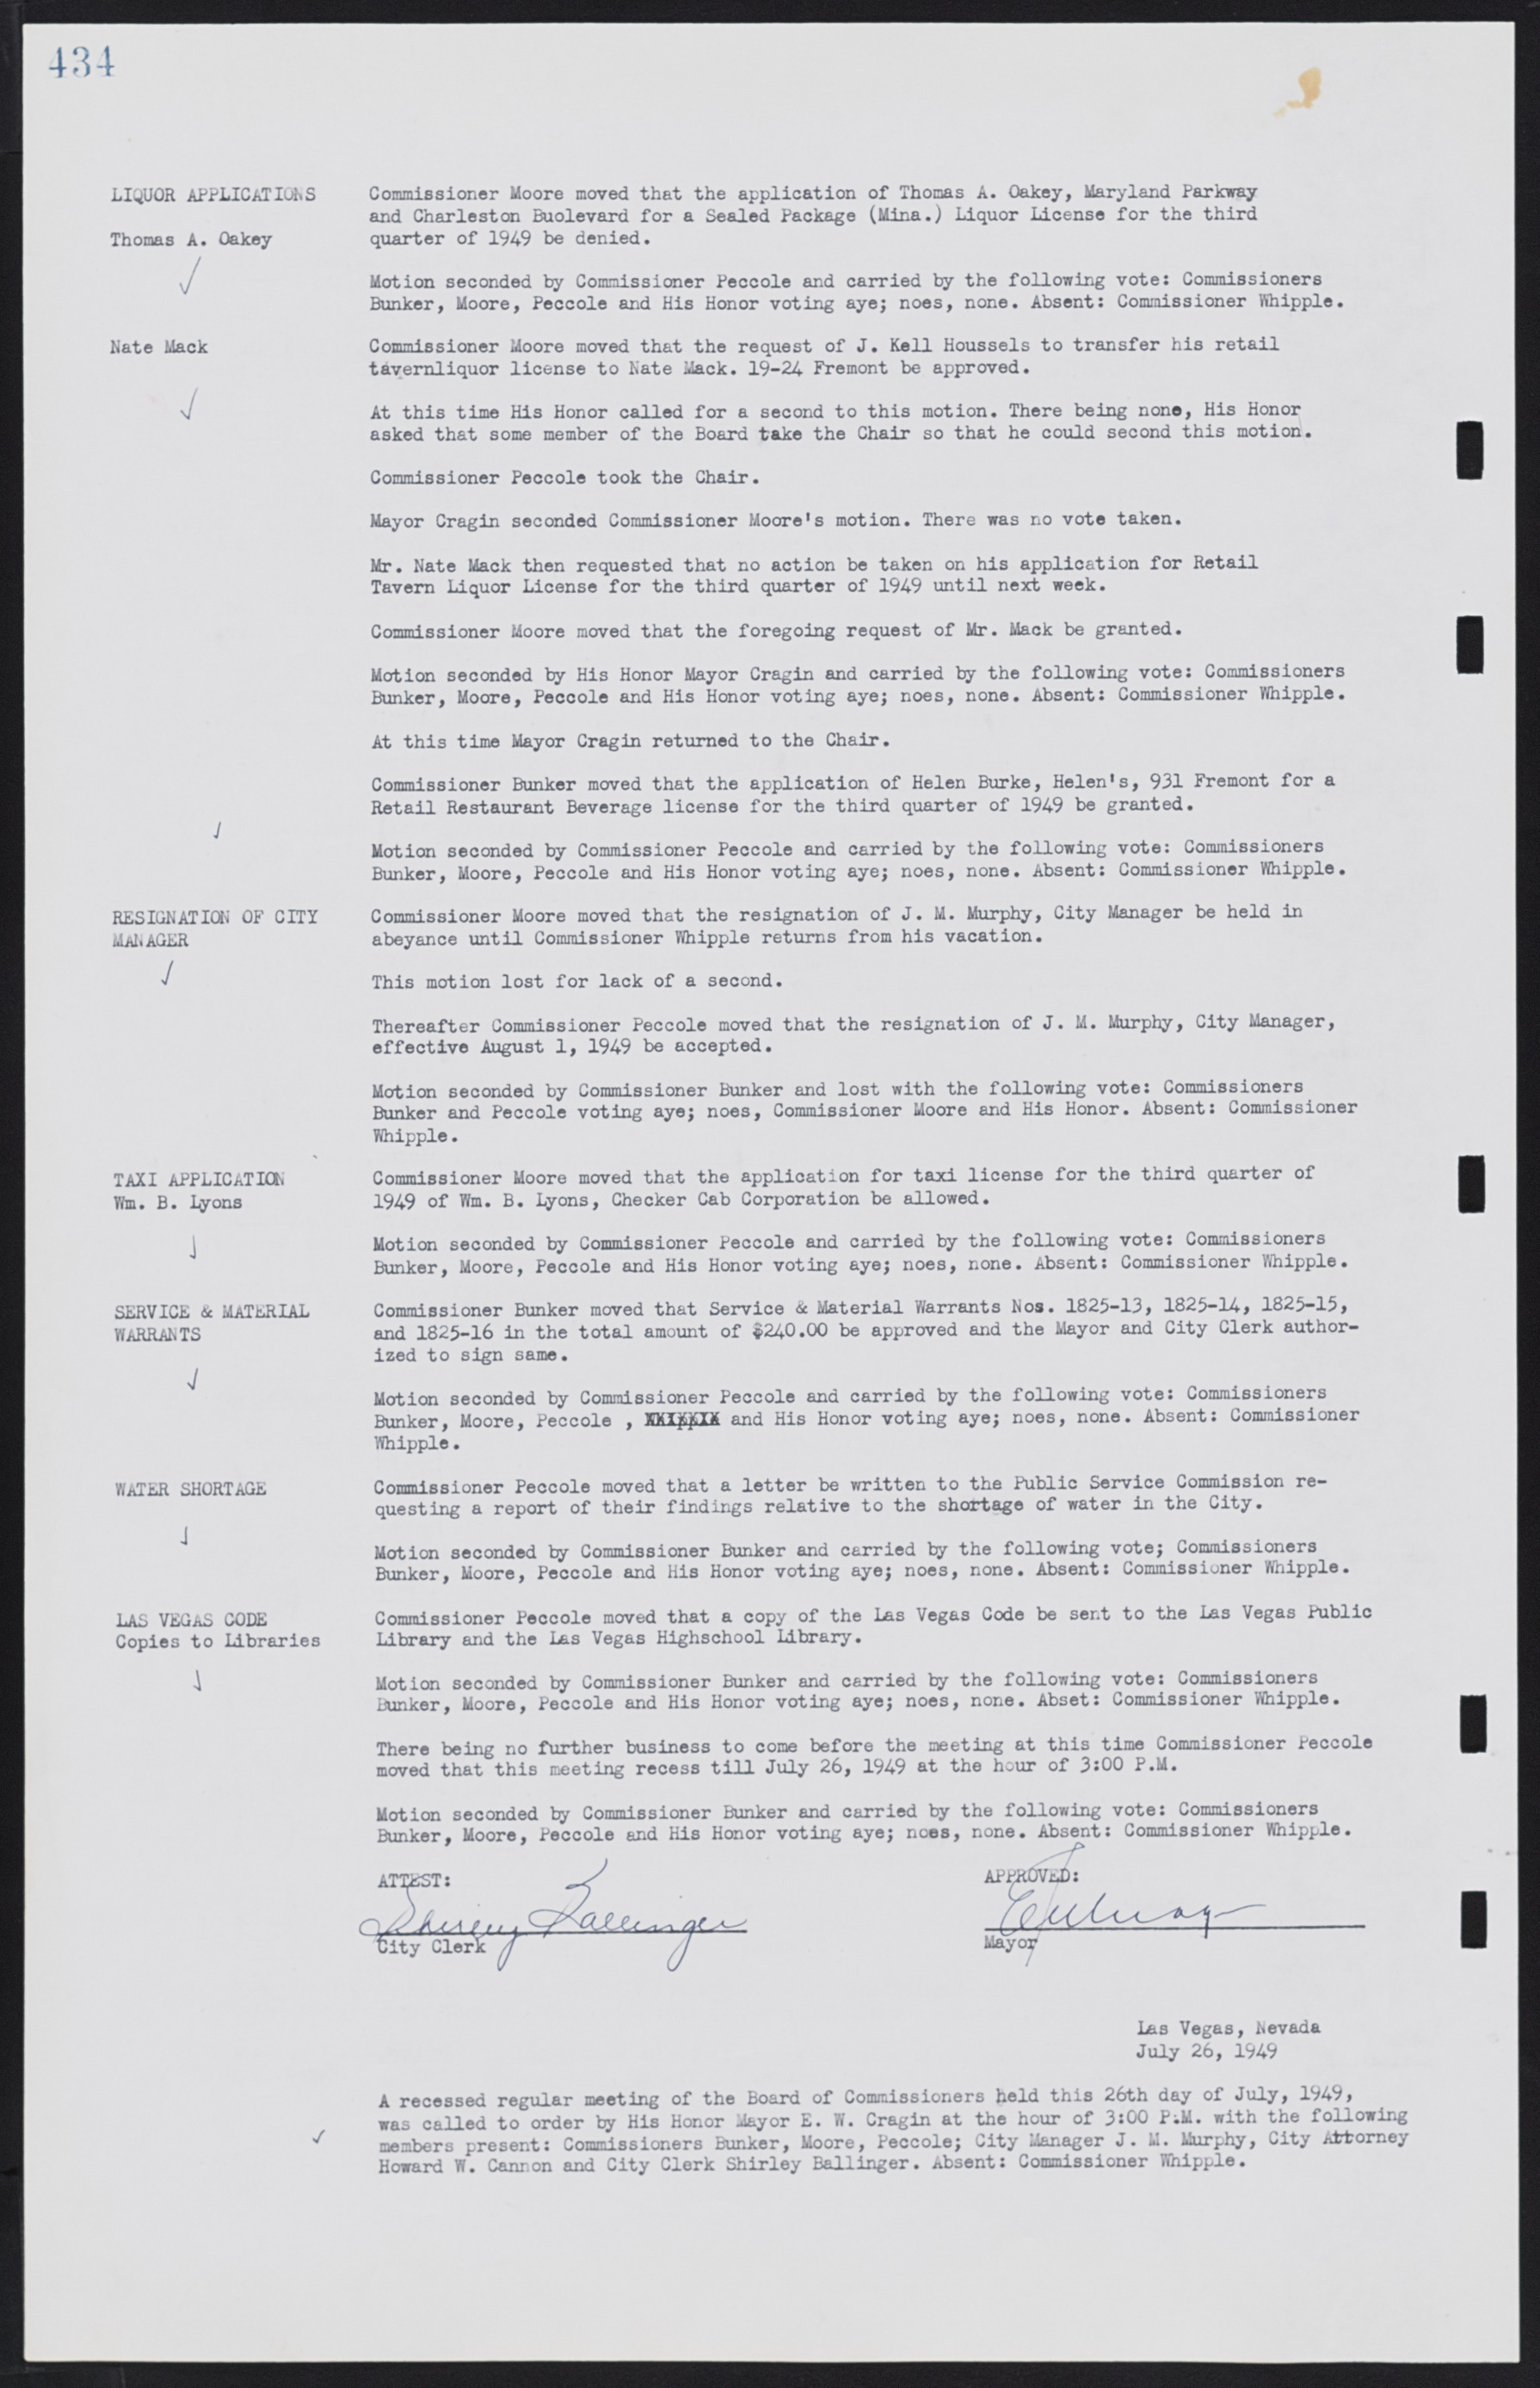 Las Vegas City Commission Minutes, January 7, 1947 to October 26, 1949, lvc000006-466